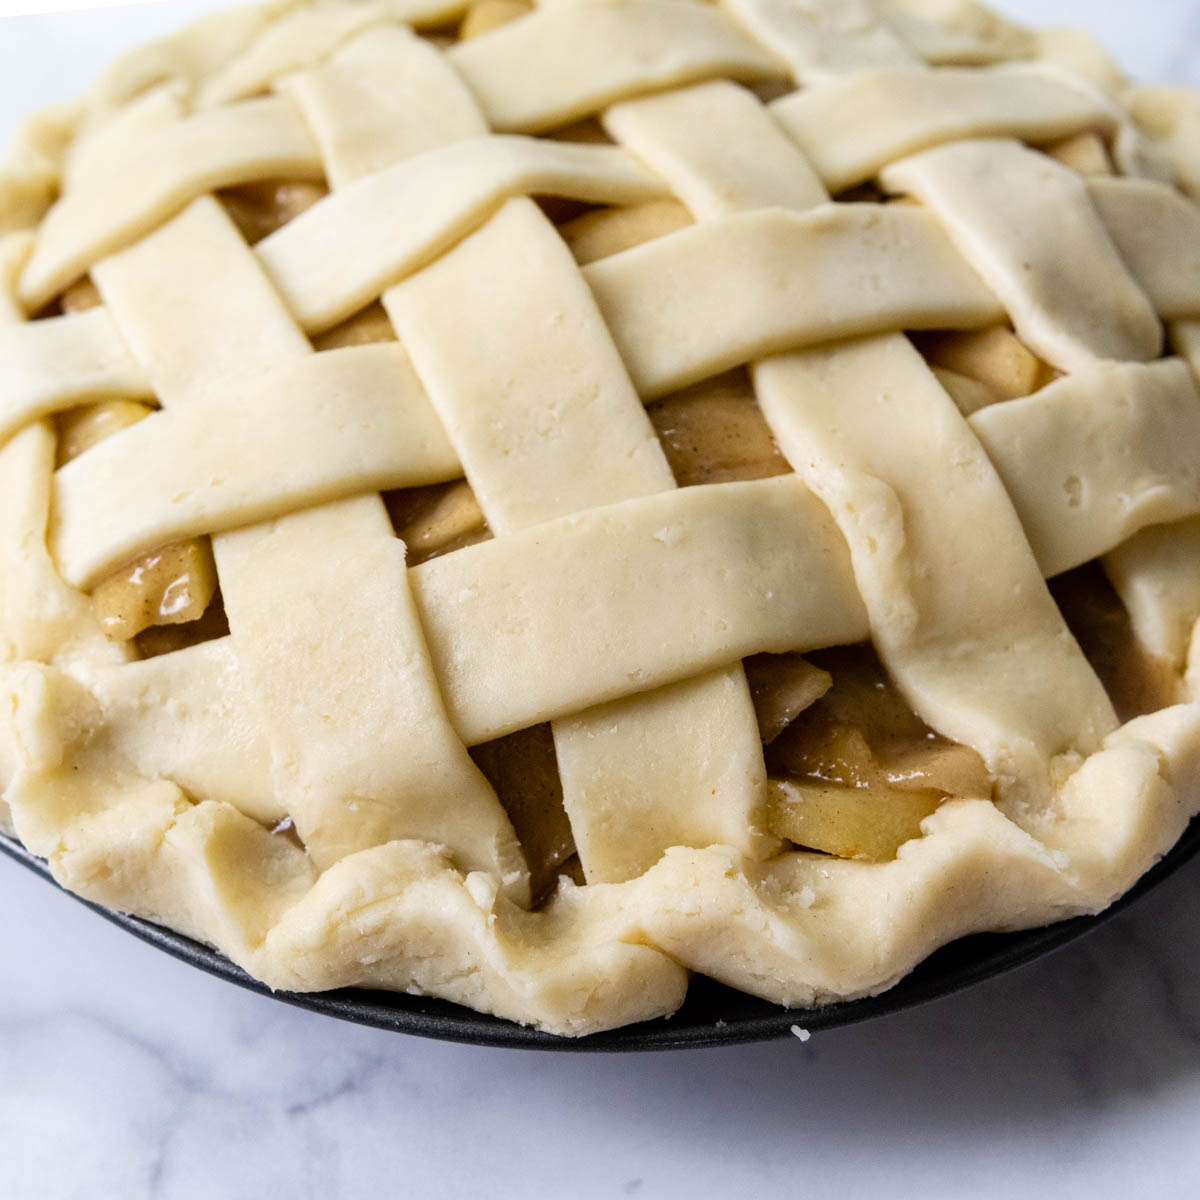 unbaked pie with decorative edge.